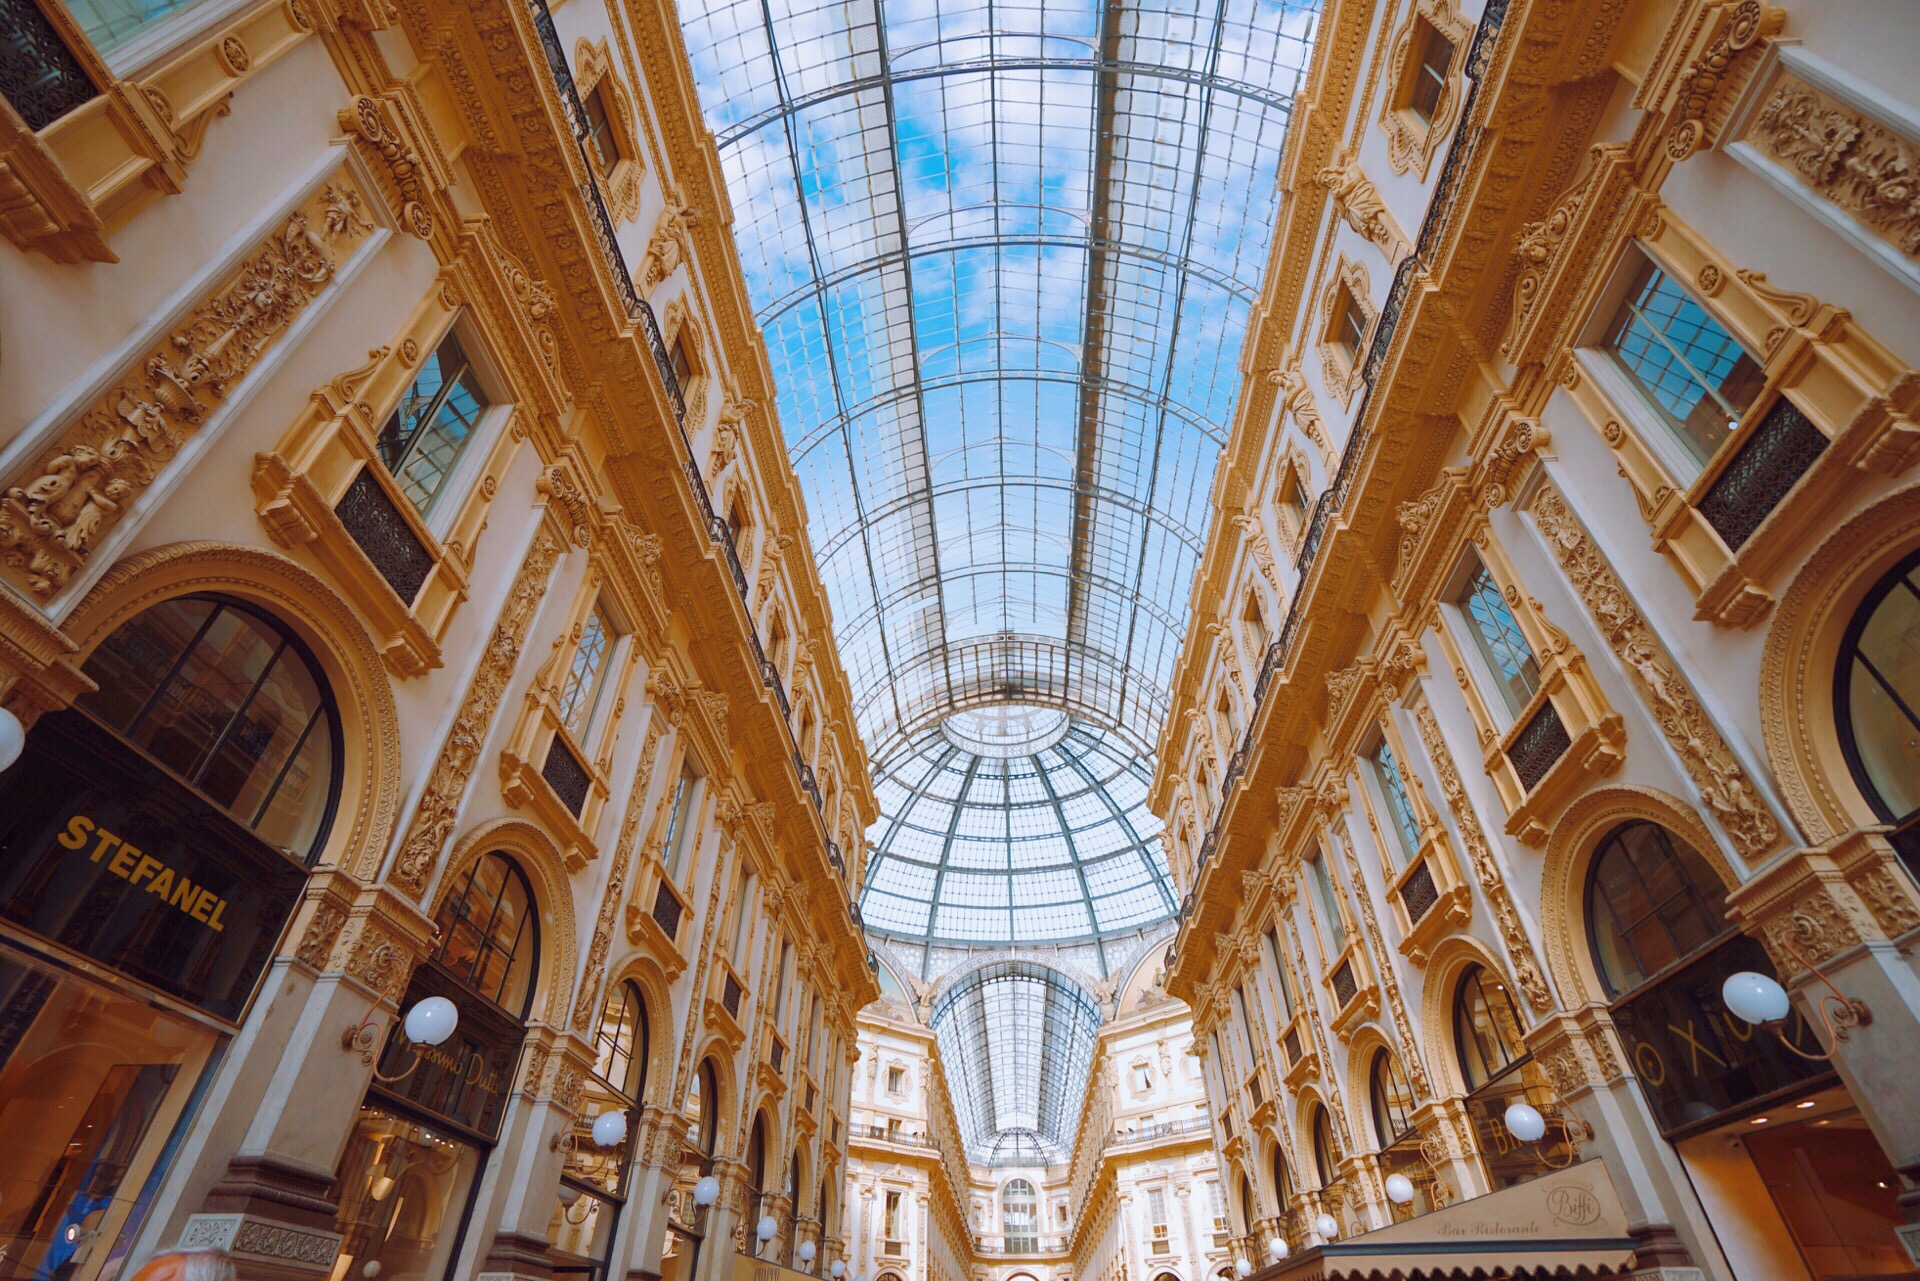 LOUIS VUITTON - 24 Photos & 13 Reviews - Galleria Vittorio Emanuele, Milano,  Italy - Luggage - Yelp